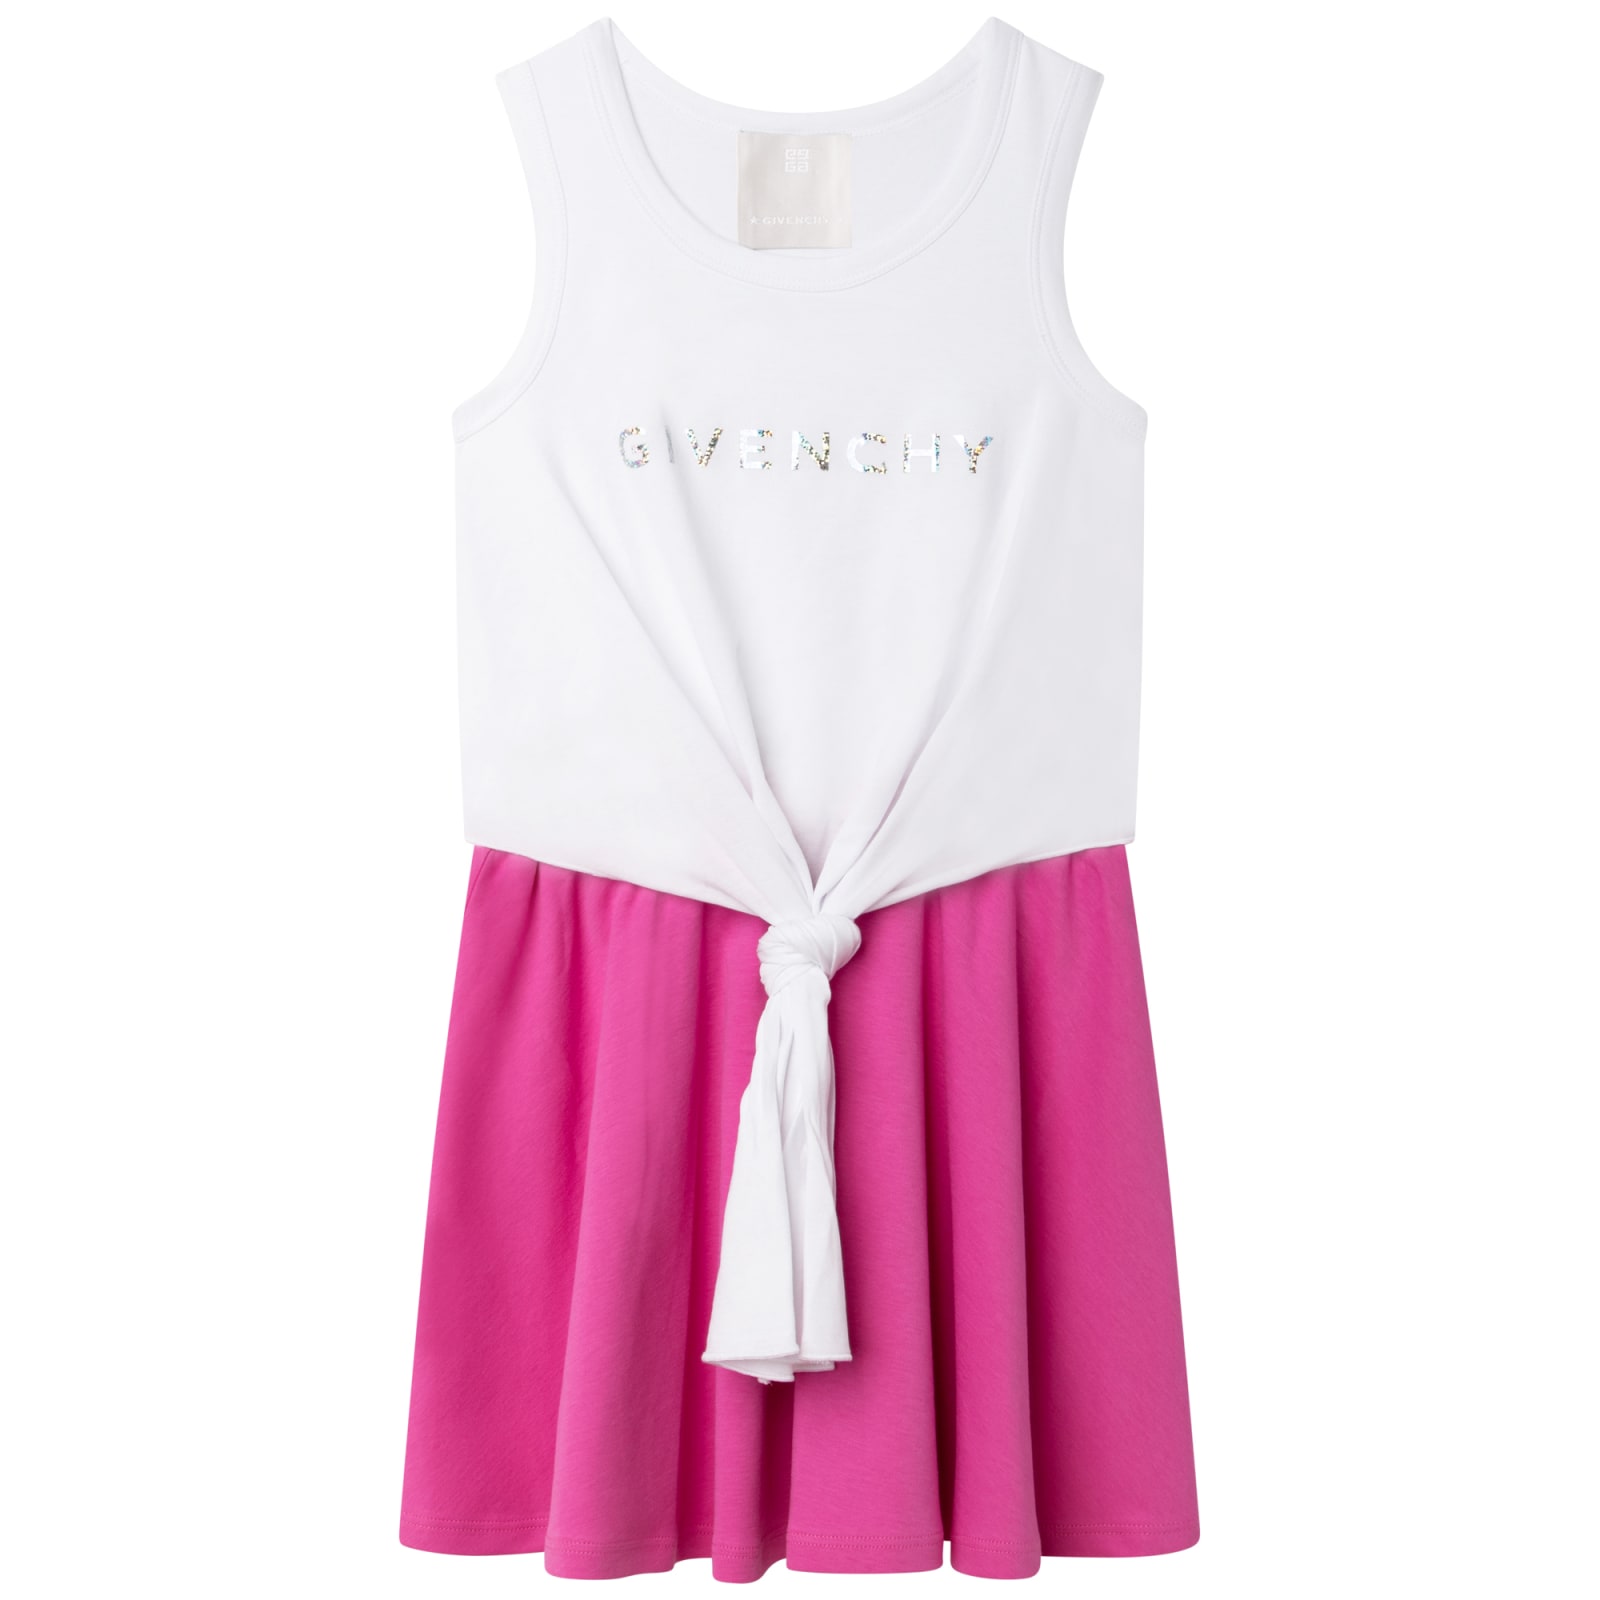 Givenchy Color Block Dress